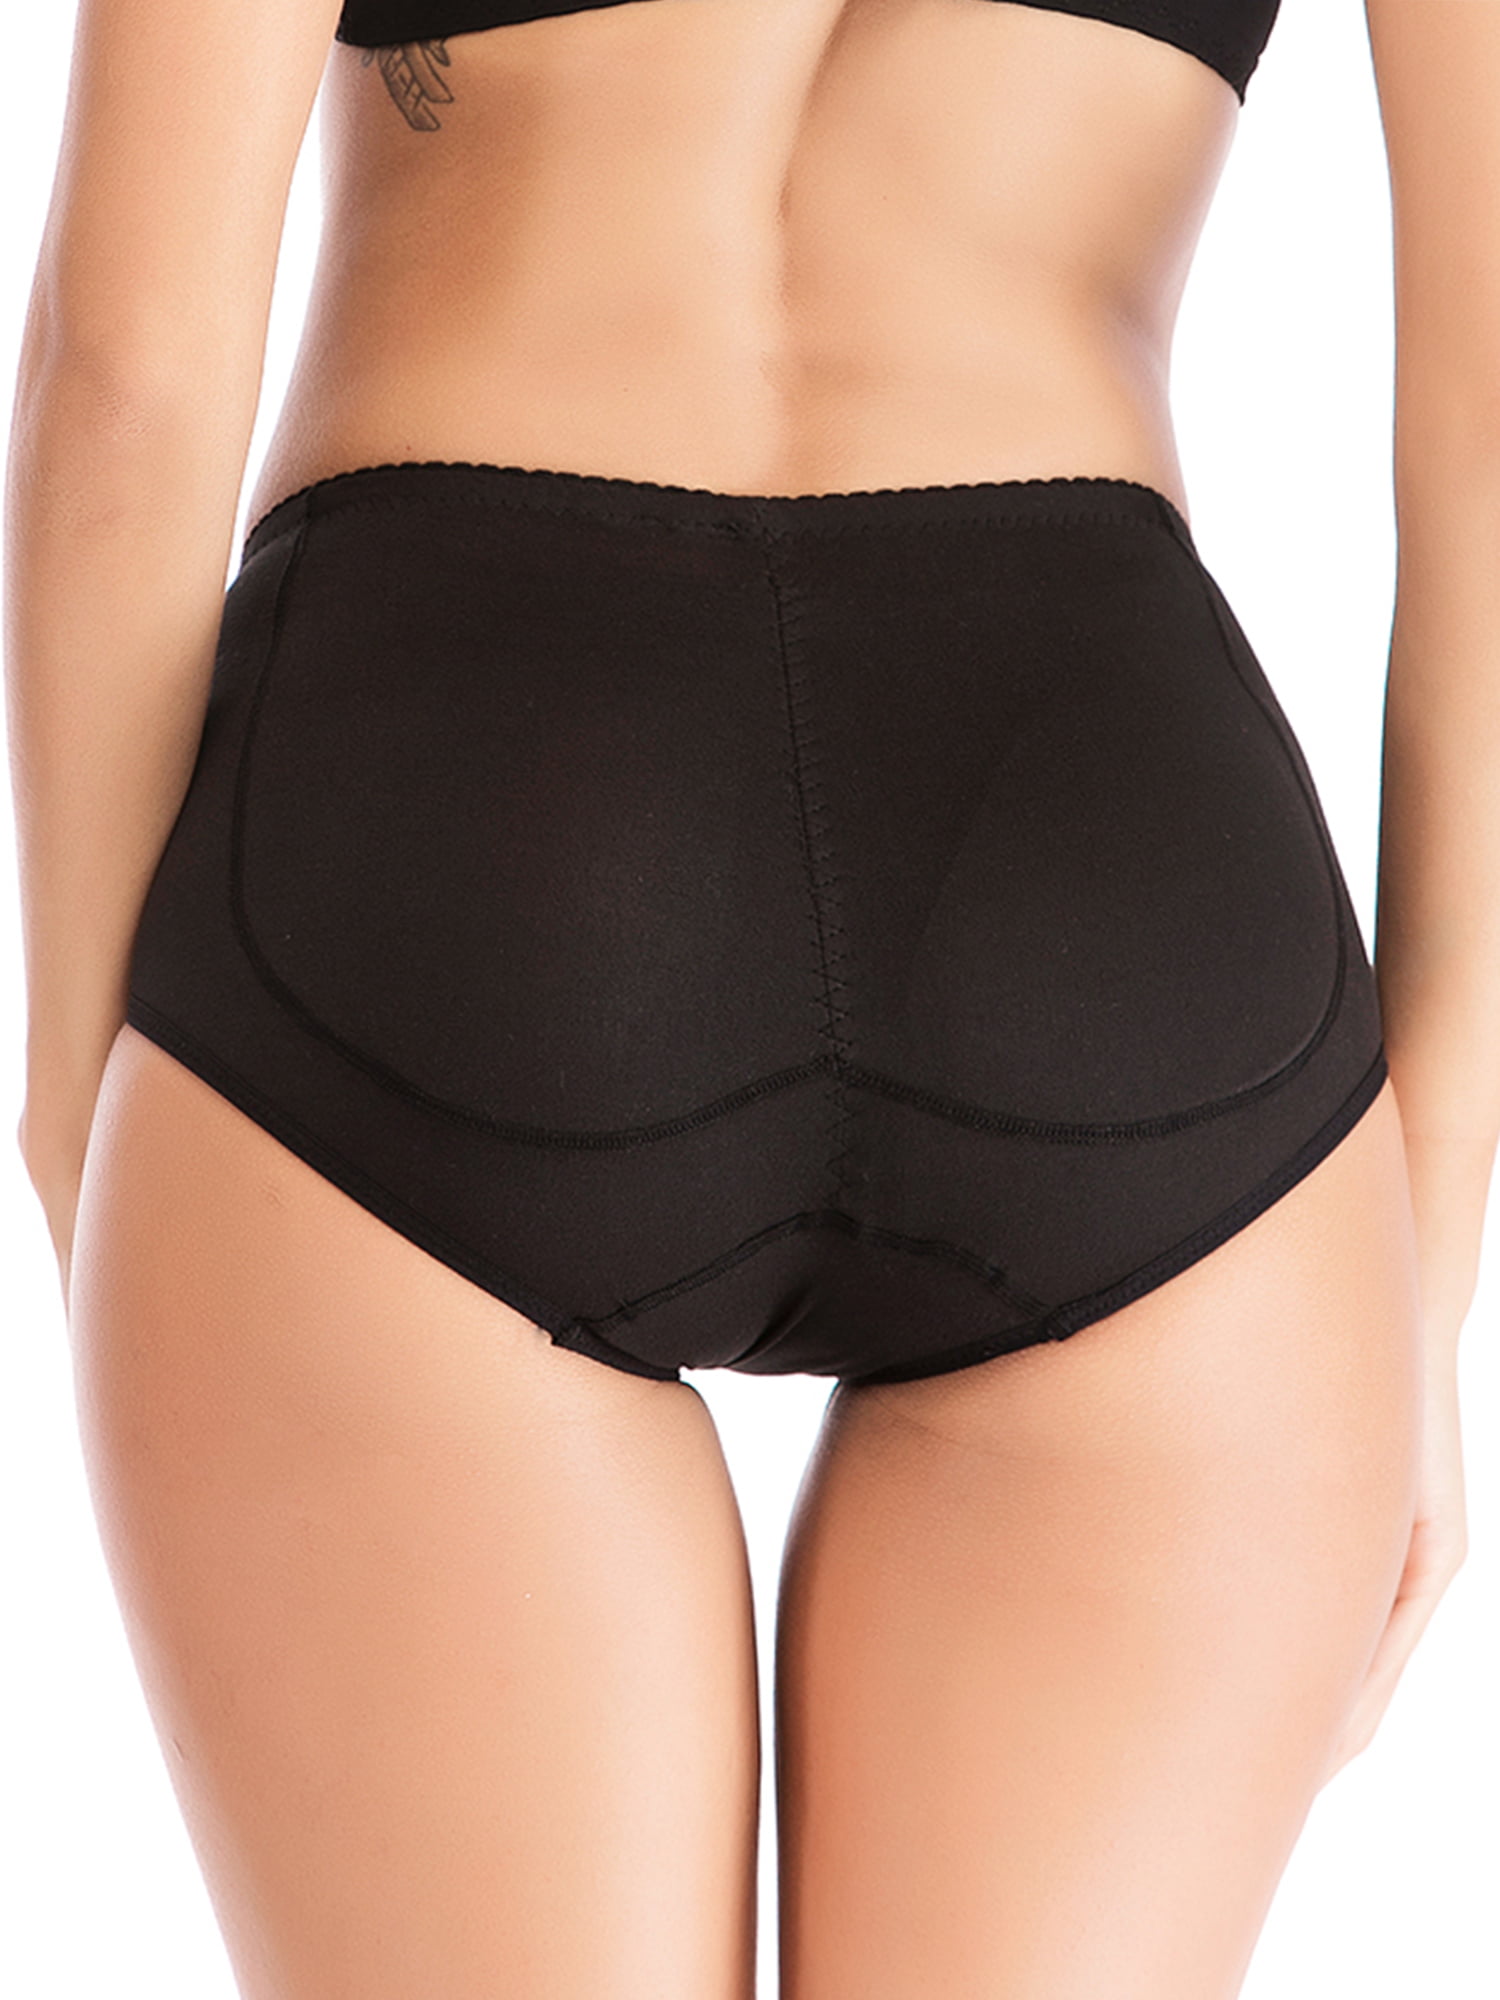 FOCUSSEXY Women Silicone Butt Lifter Pads Shapewear Hip Enhancer Underwear Panty